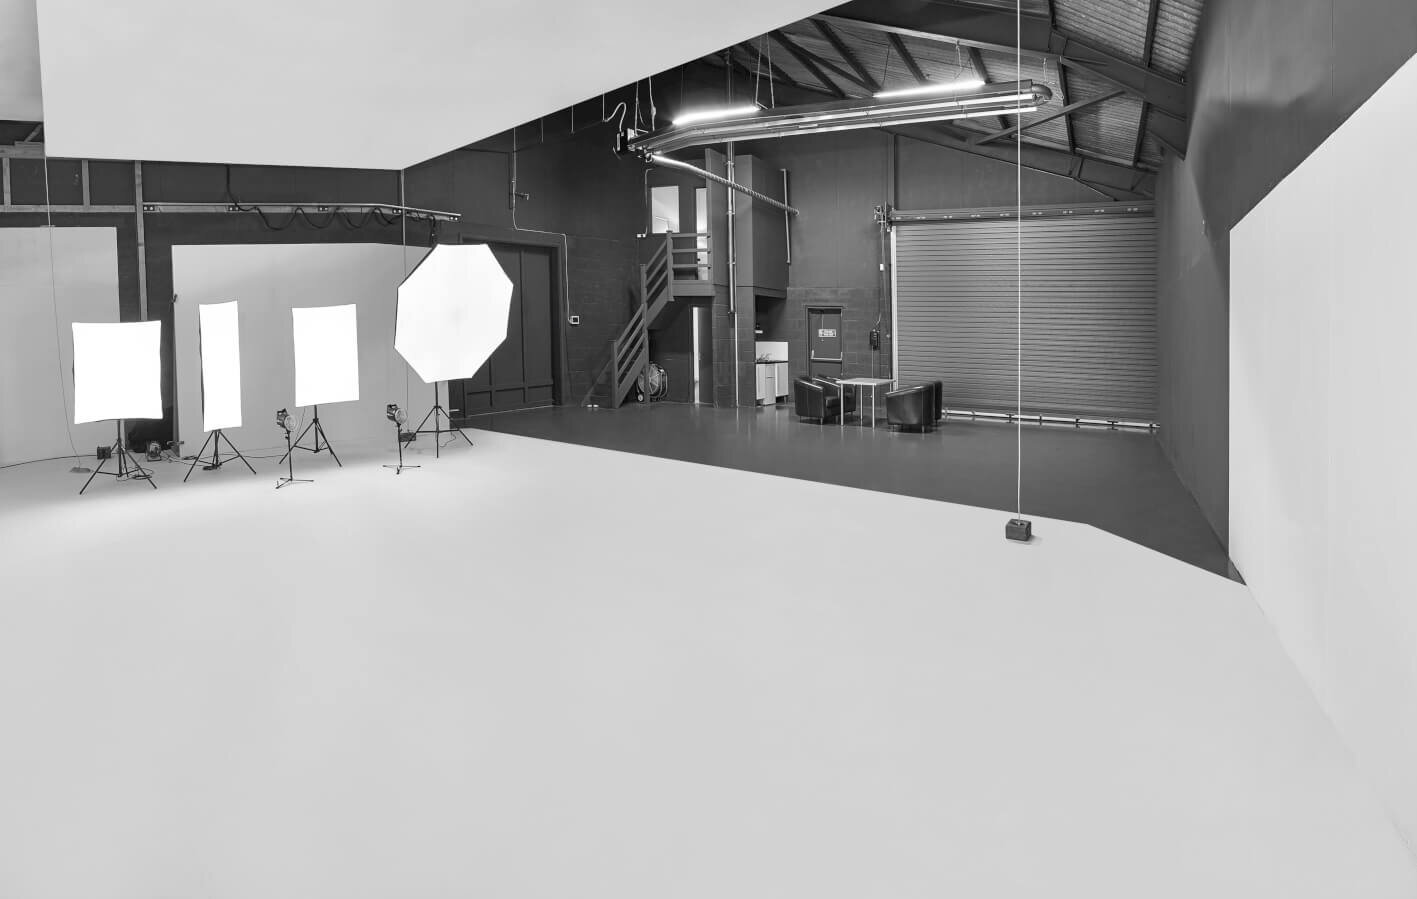 Studio-3-three-moorland-studios-fashion-studio-infinity-wall-film-photography-hire-space-worcester.jpg